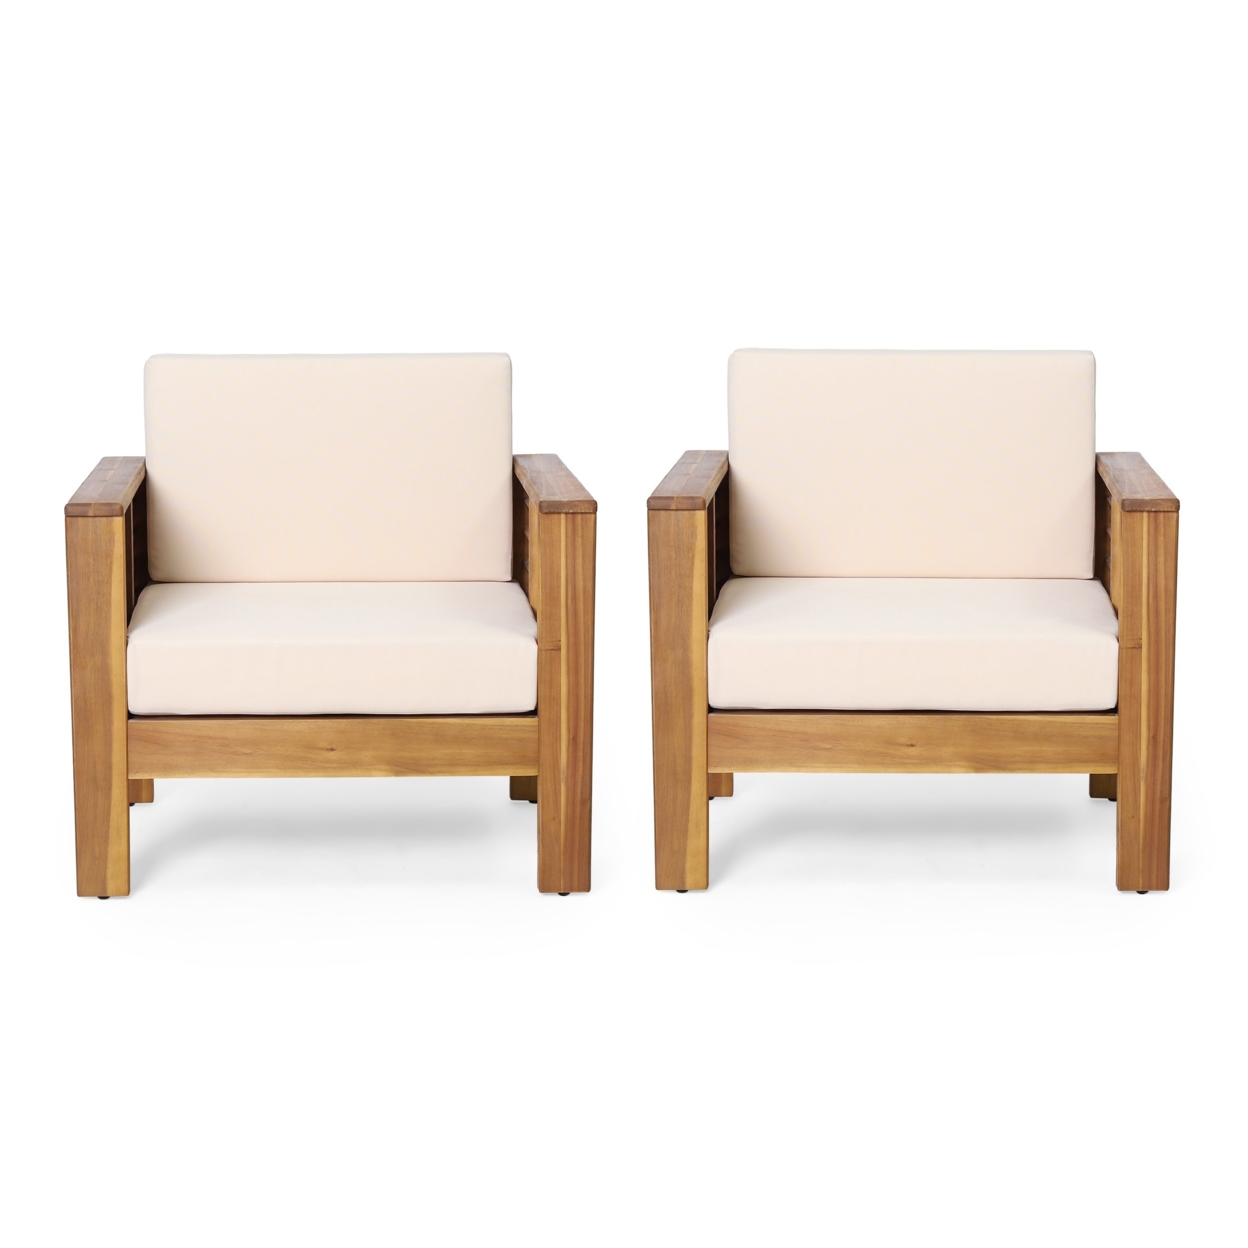 Rabun Outdoor Acacia Wood Club Chairs With Cushions, Set Of 2 - Teak/cream